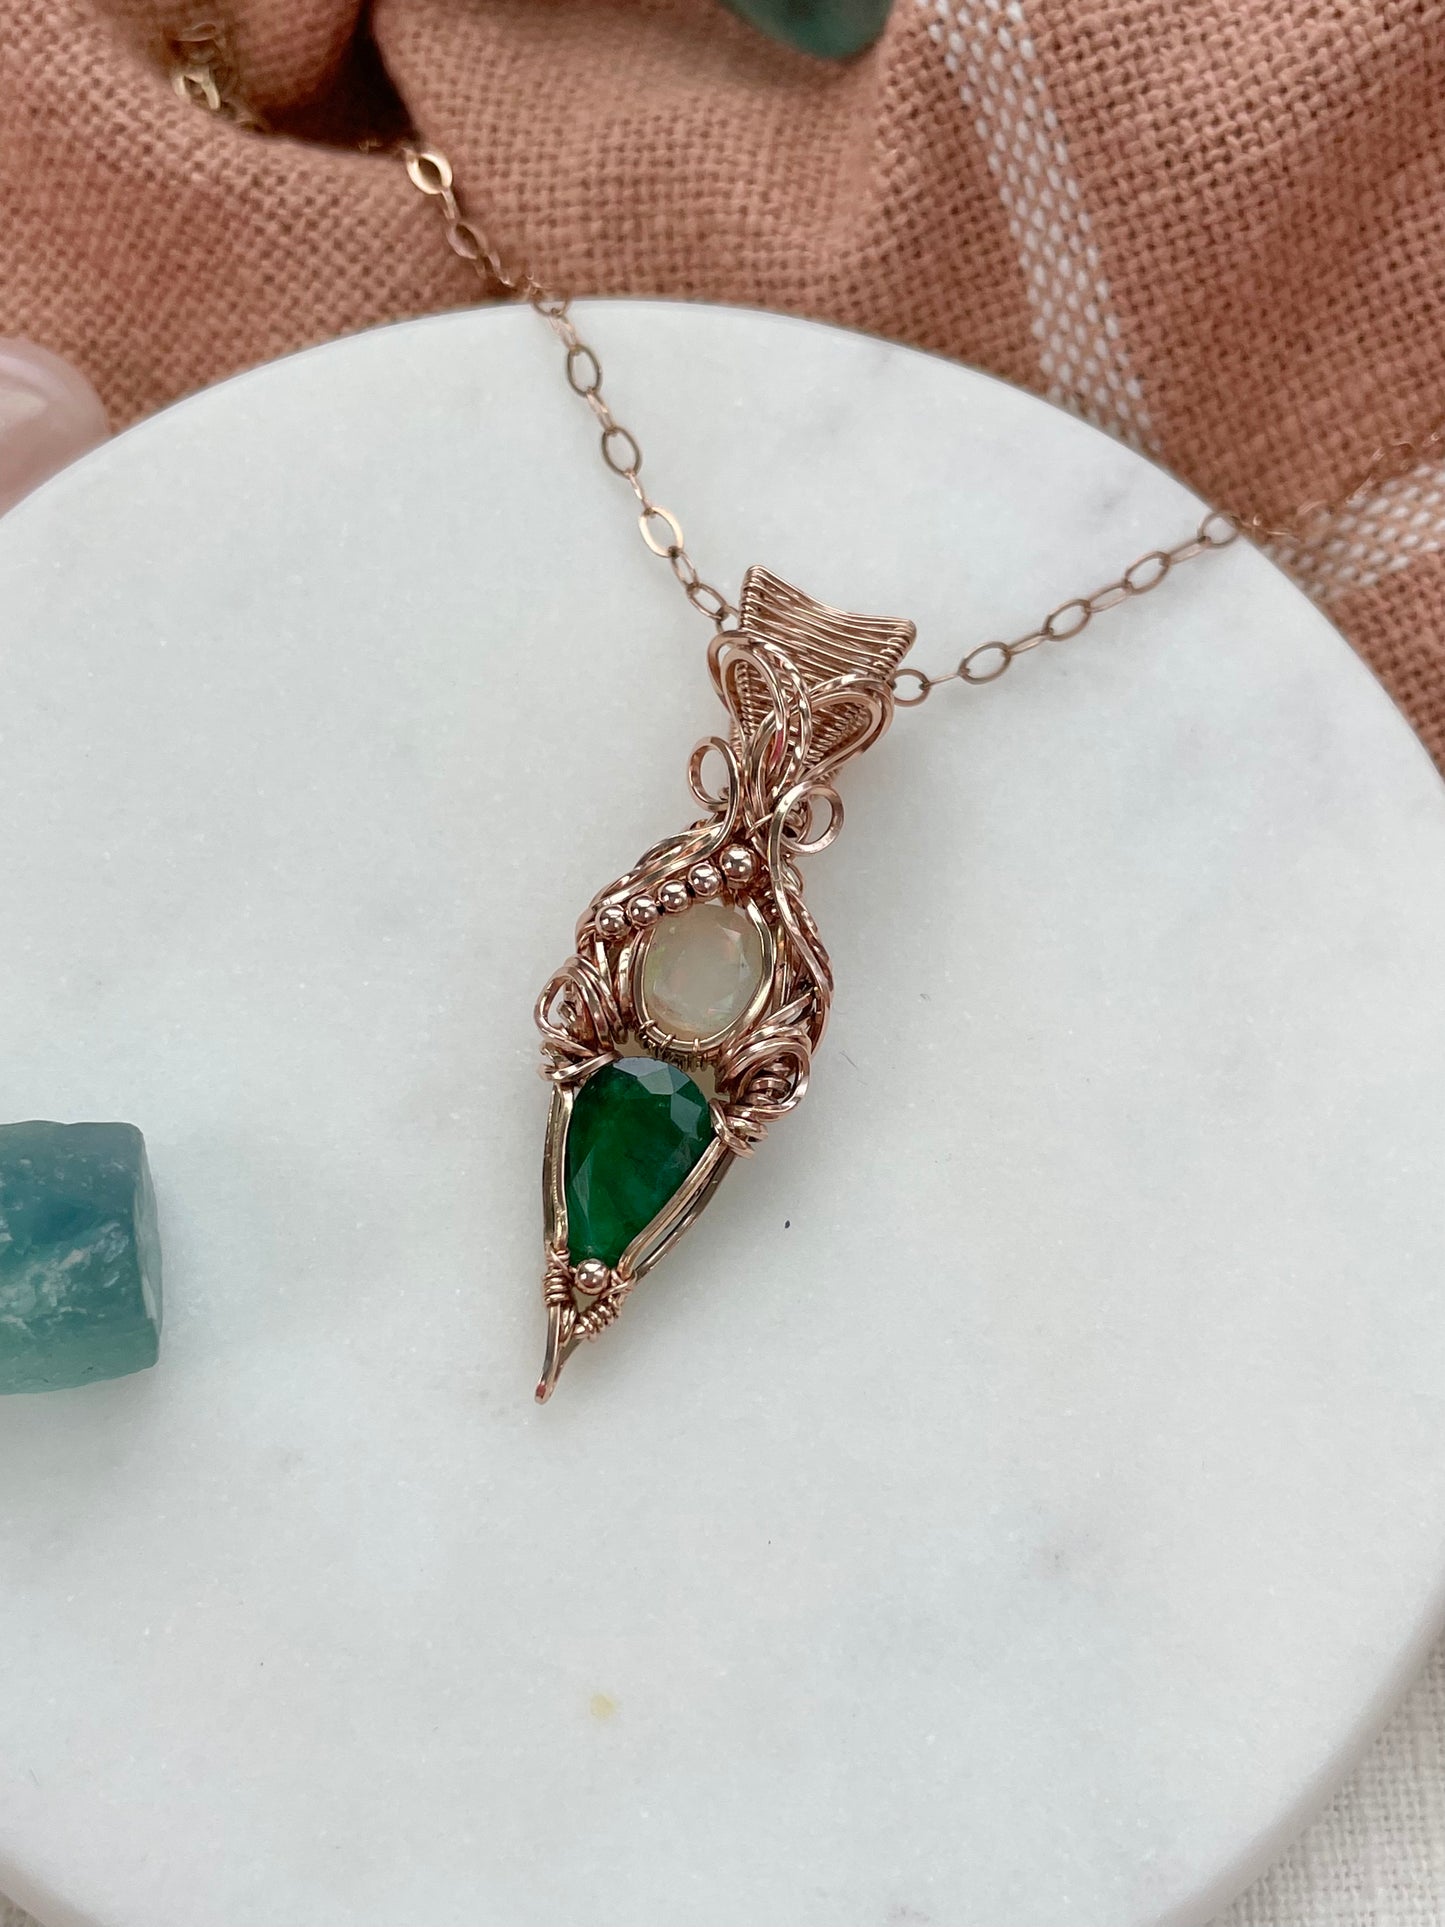 Emerald & Opal Necklace in 14k rose gold filled